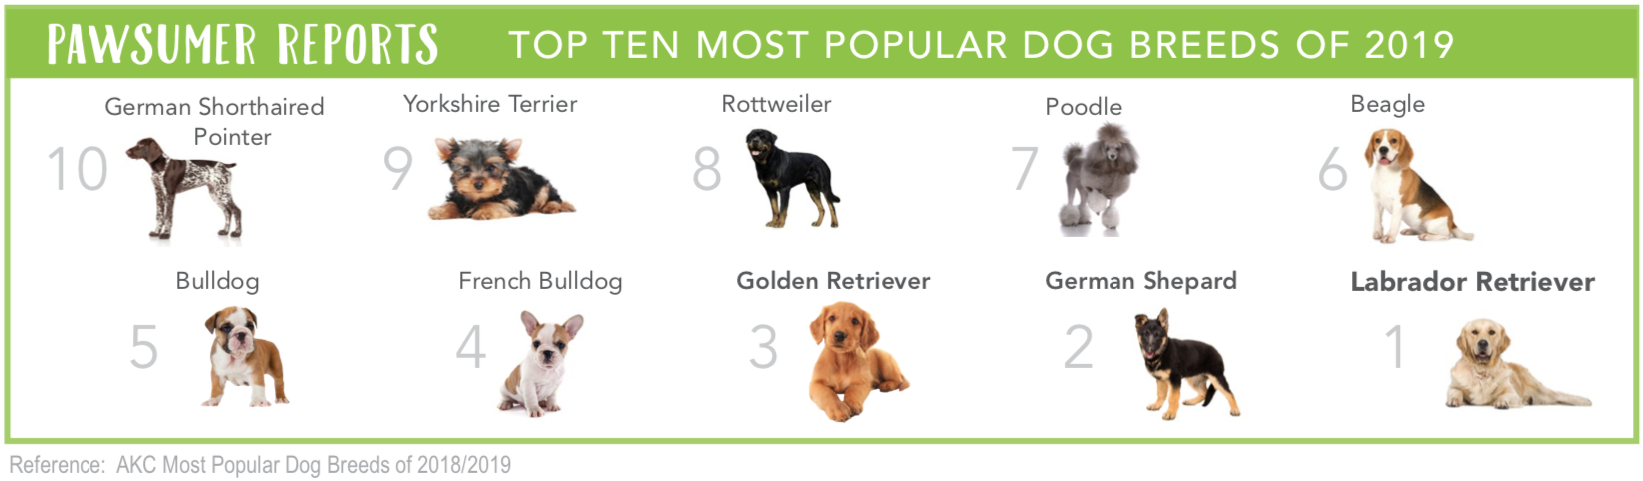 top 10 most popular dog breeds